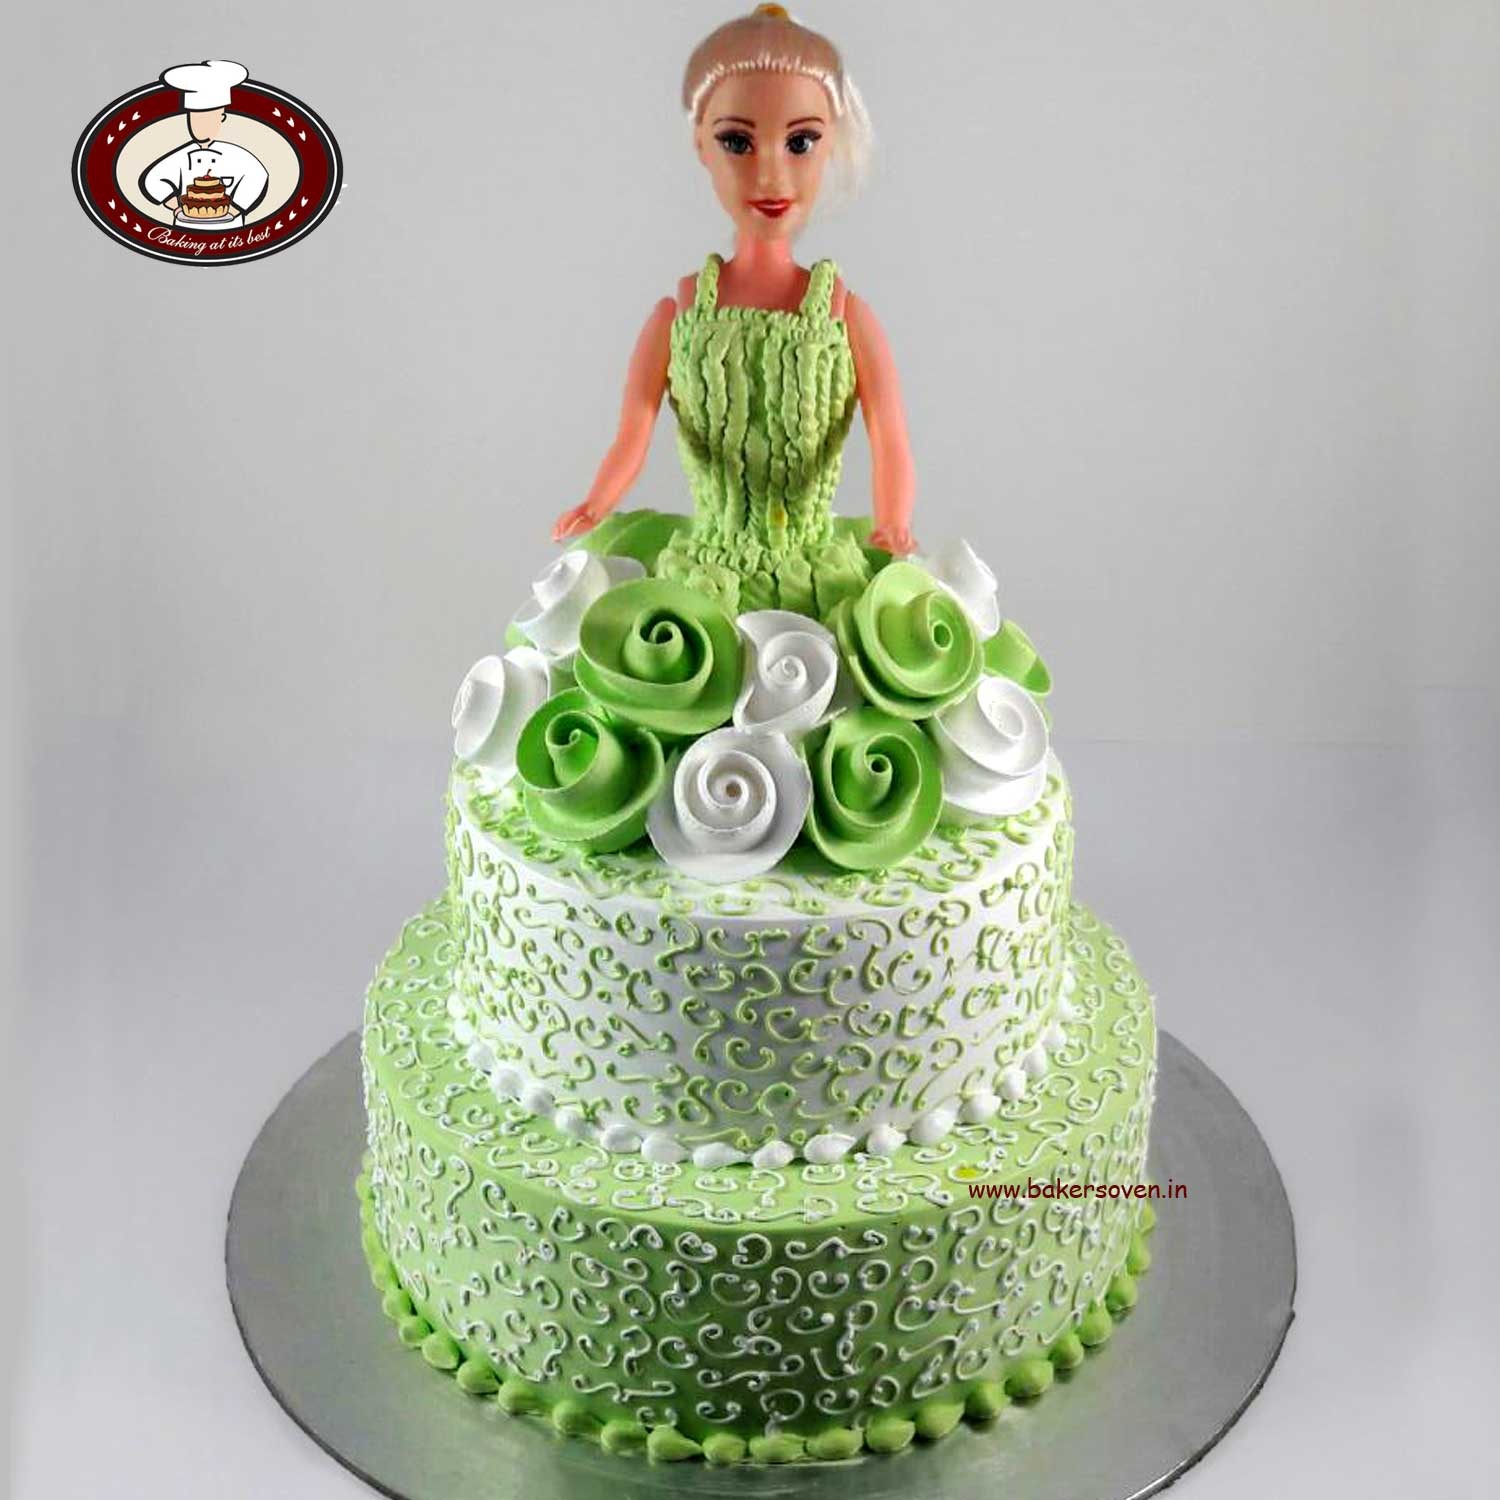 Poinsettia Cake: Festive Holiday Cake Design - Chelsweets